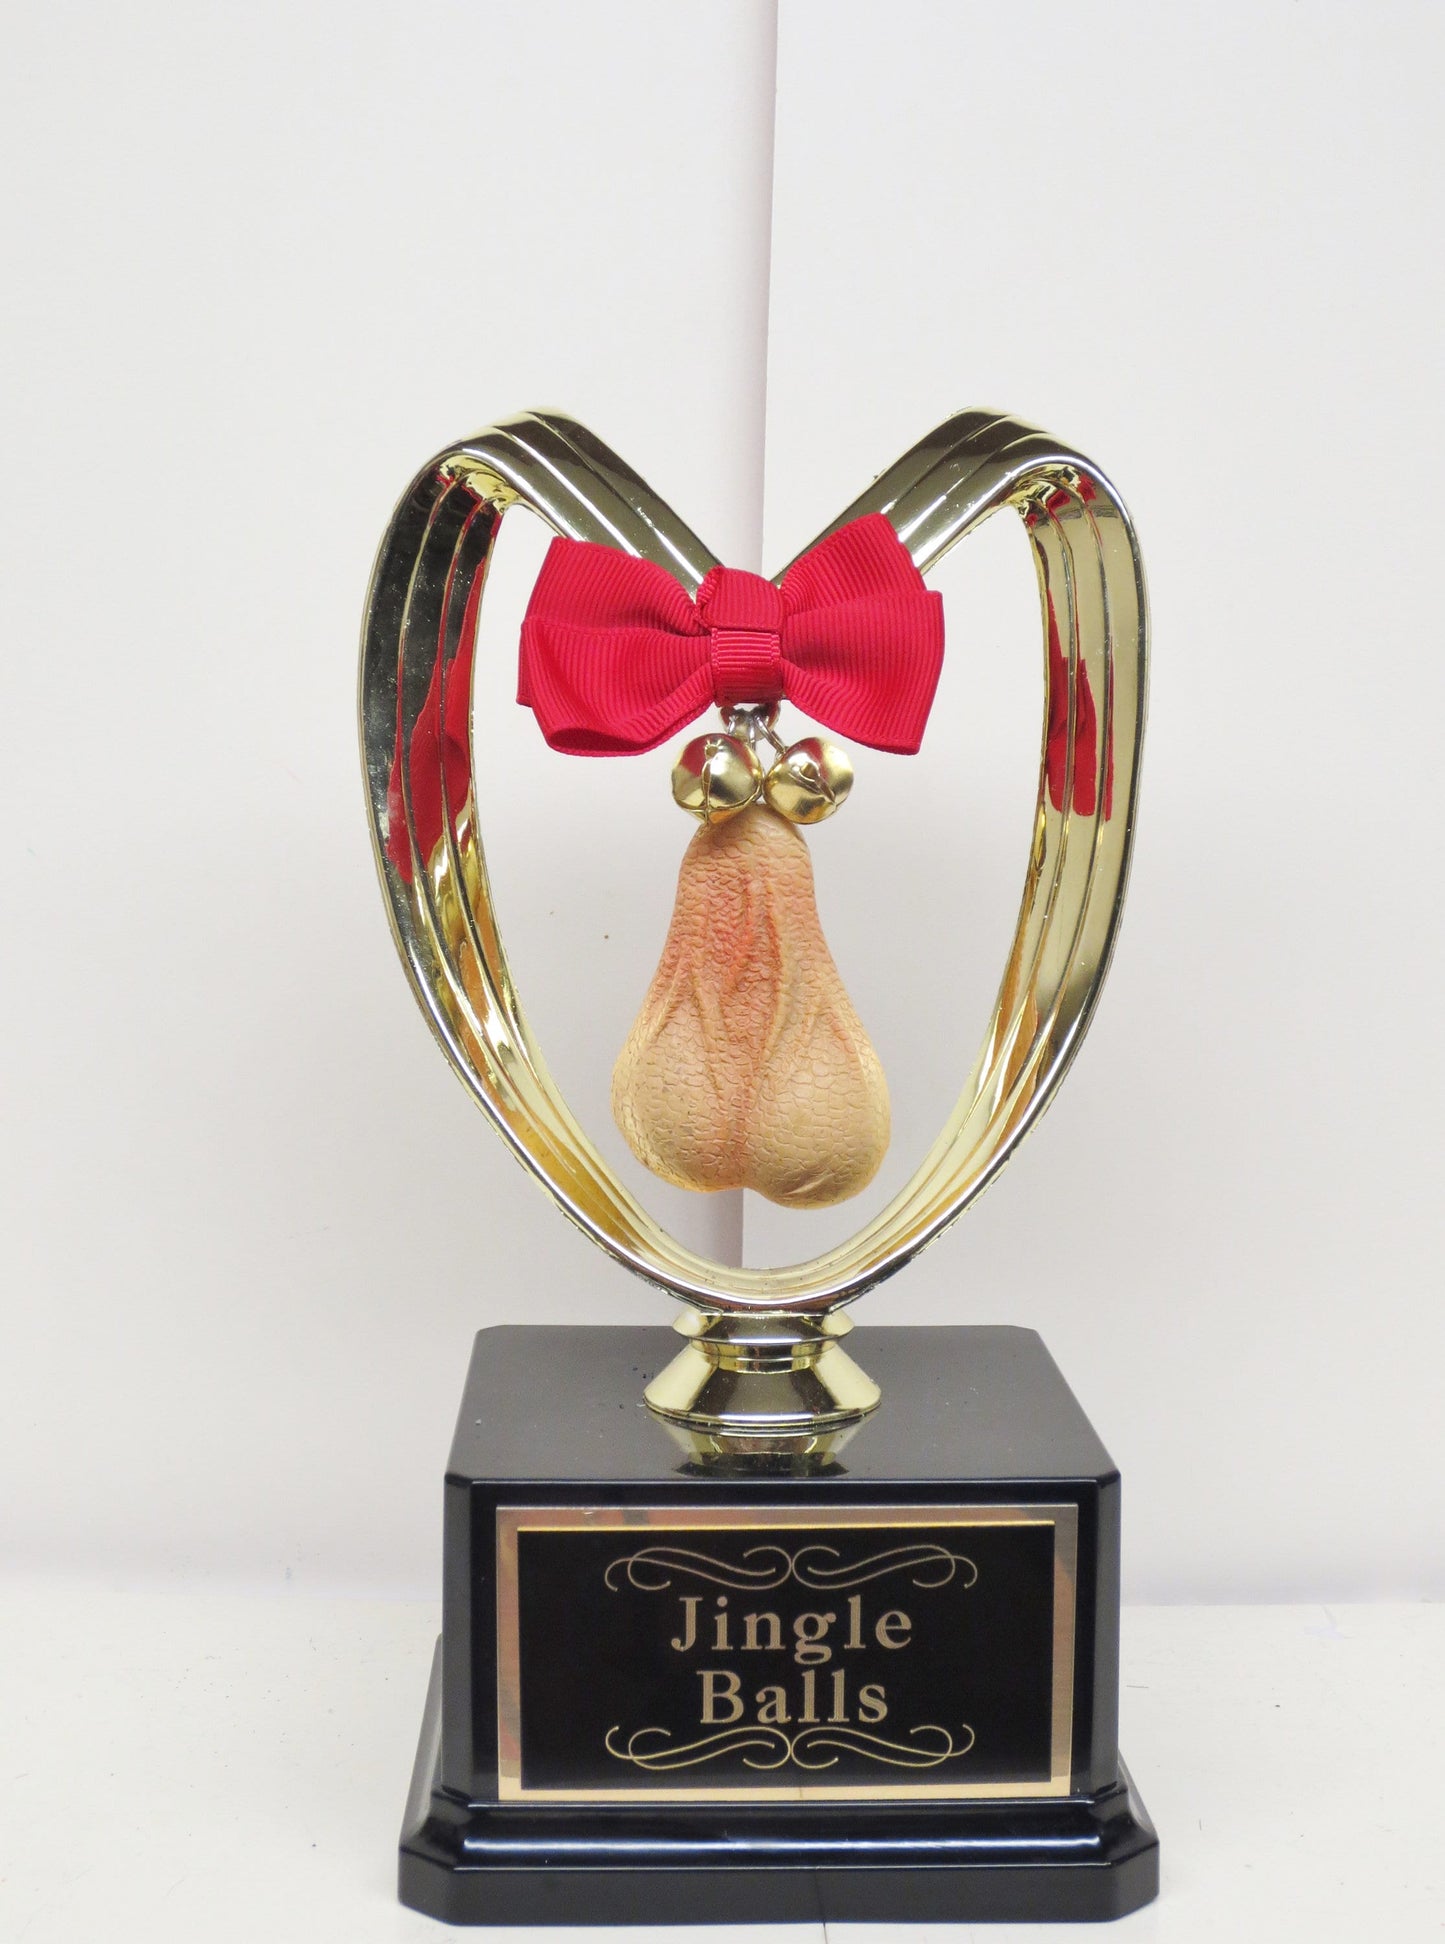 Jingle Balls Ugly Sweater Trophy Funny Christmas Ornament Holiday Aww Nuts! Award Adult Humor Xmas Gag Gift Penis Testicle Holiday Decor